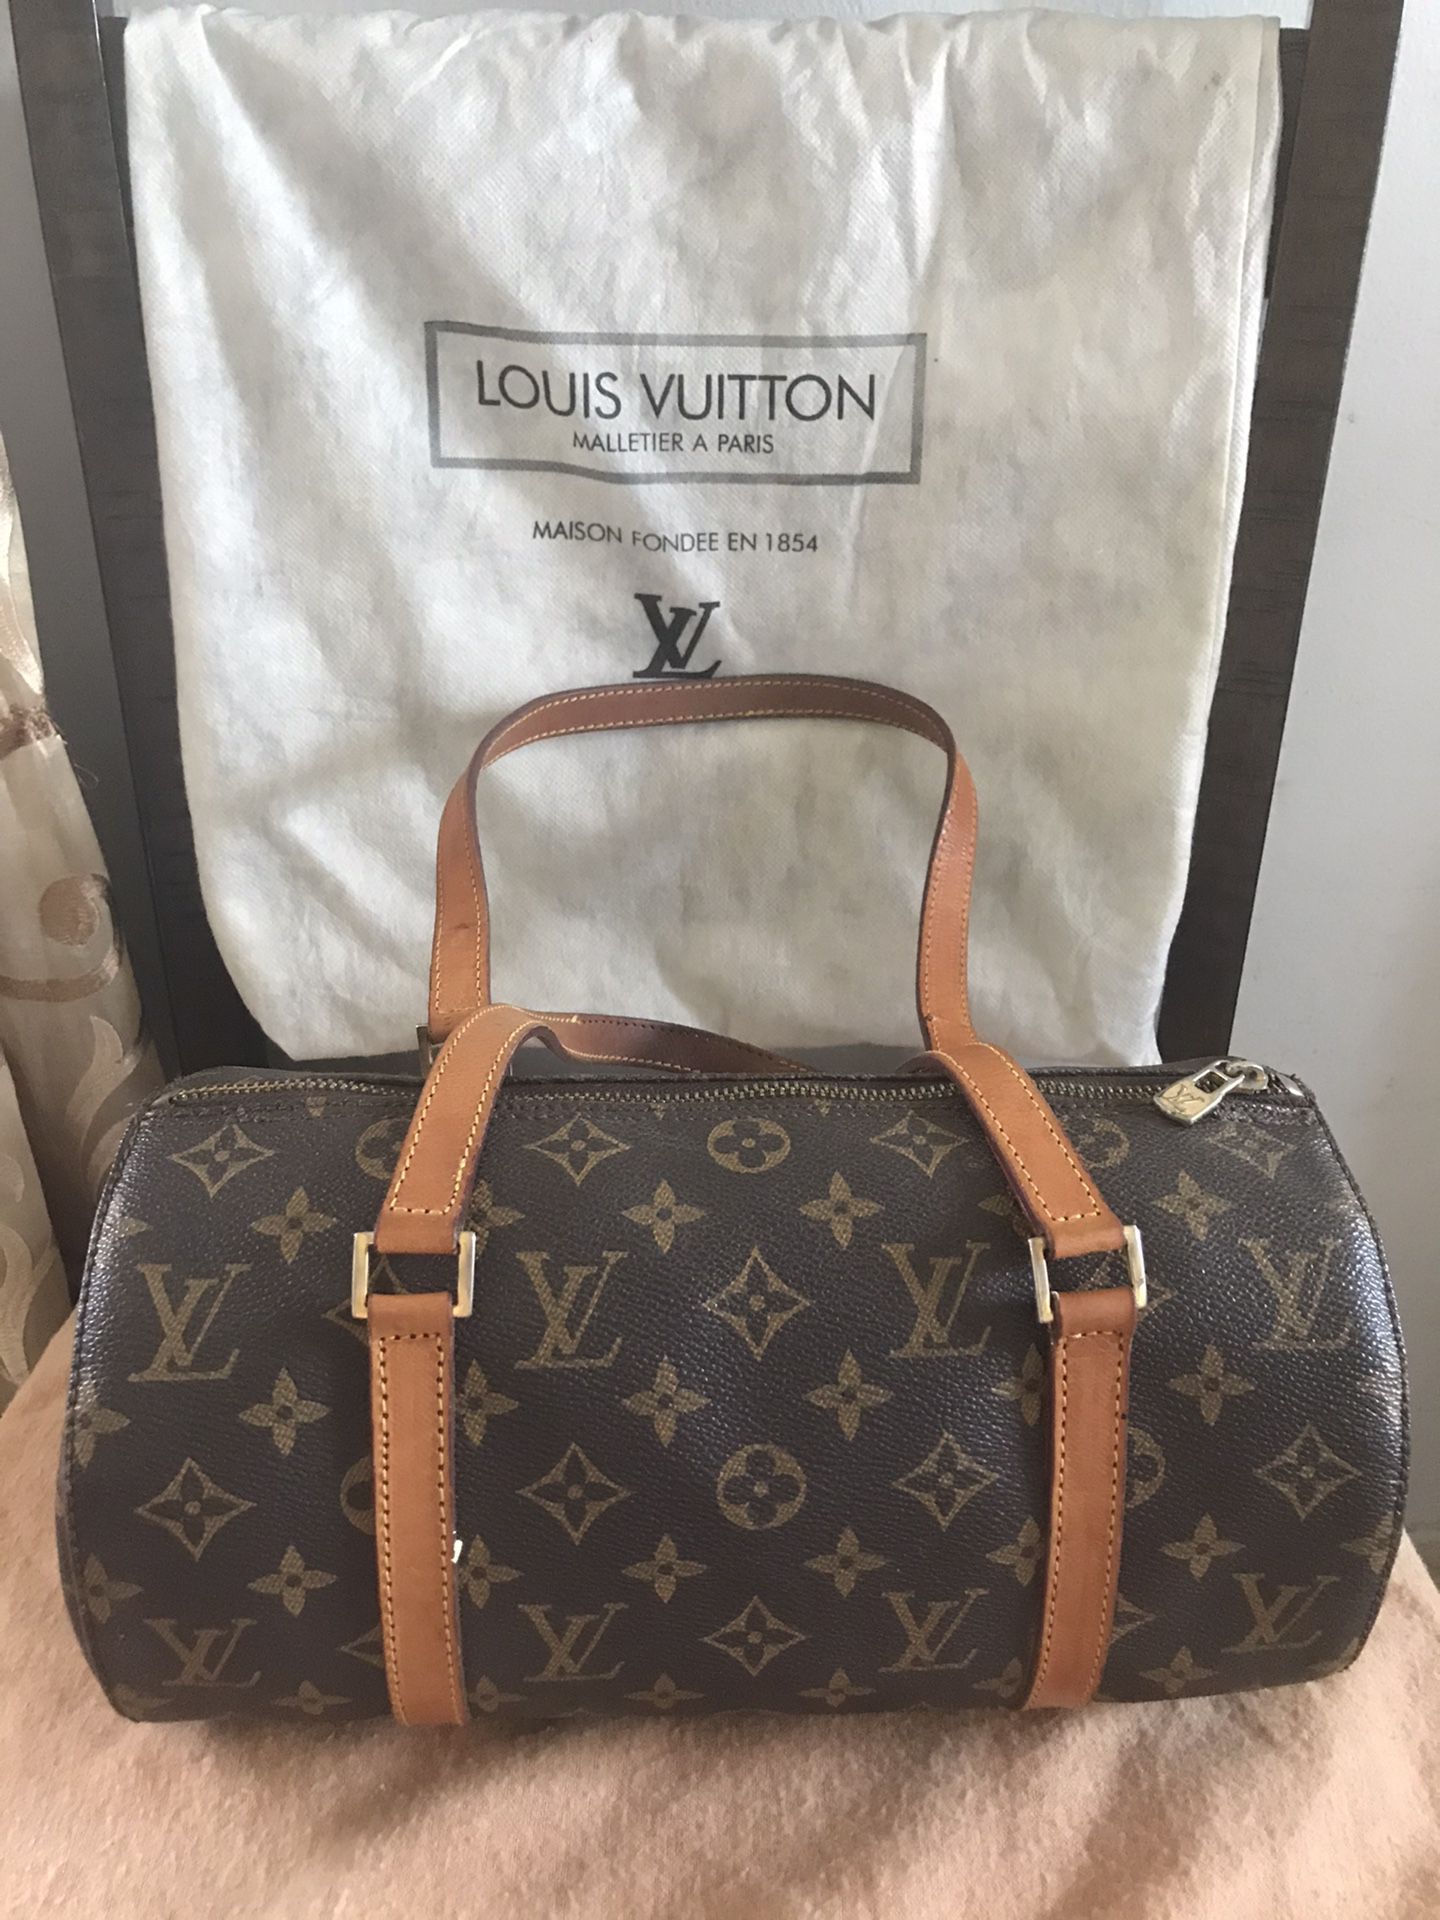 Louis Vuitton papillon 30 handbag for Sale in Los Angeles, CA - OfferUp